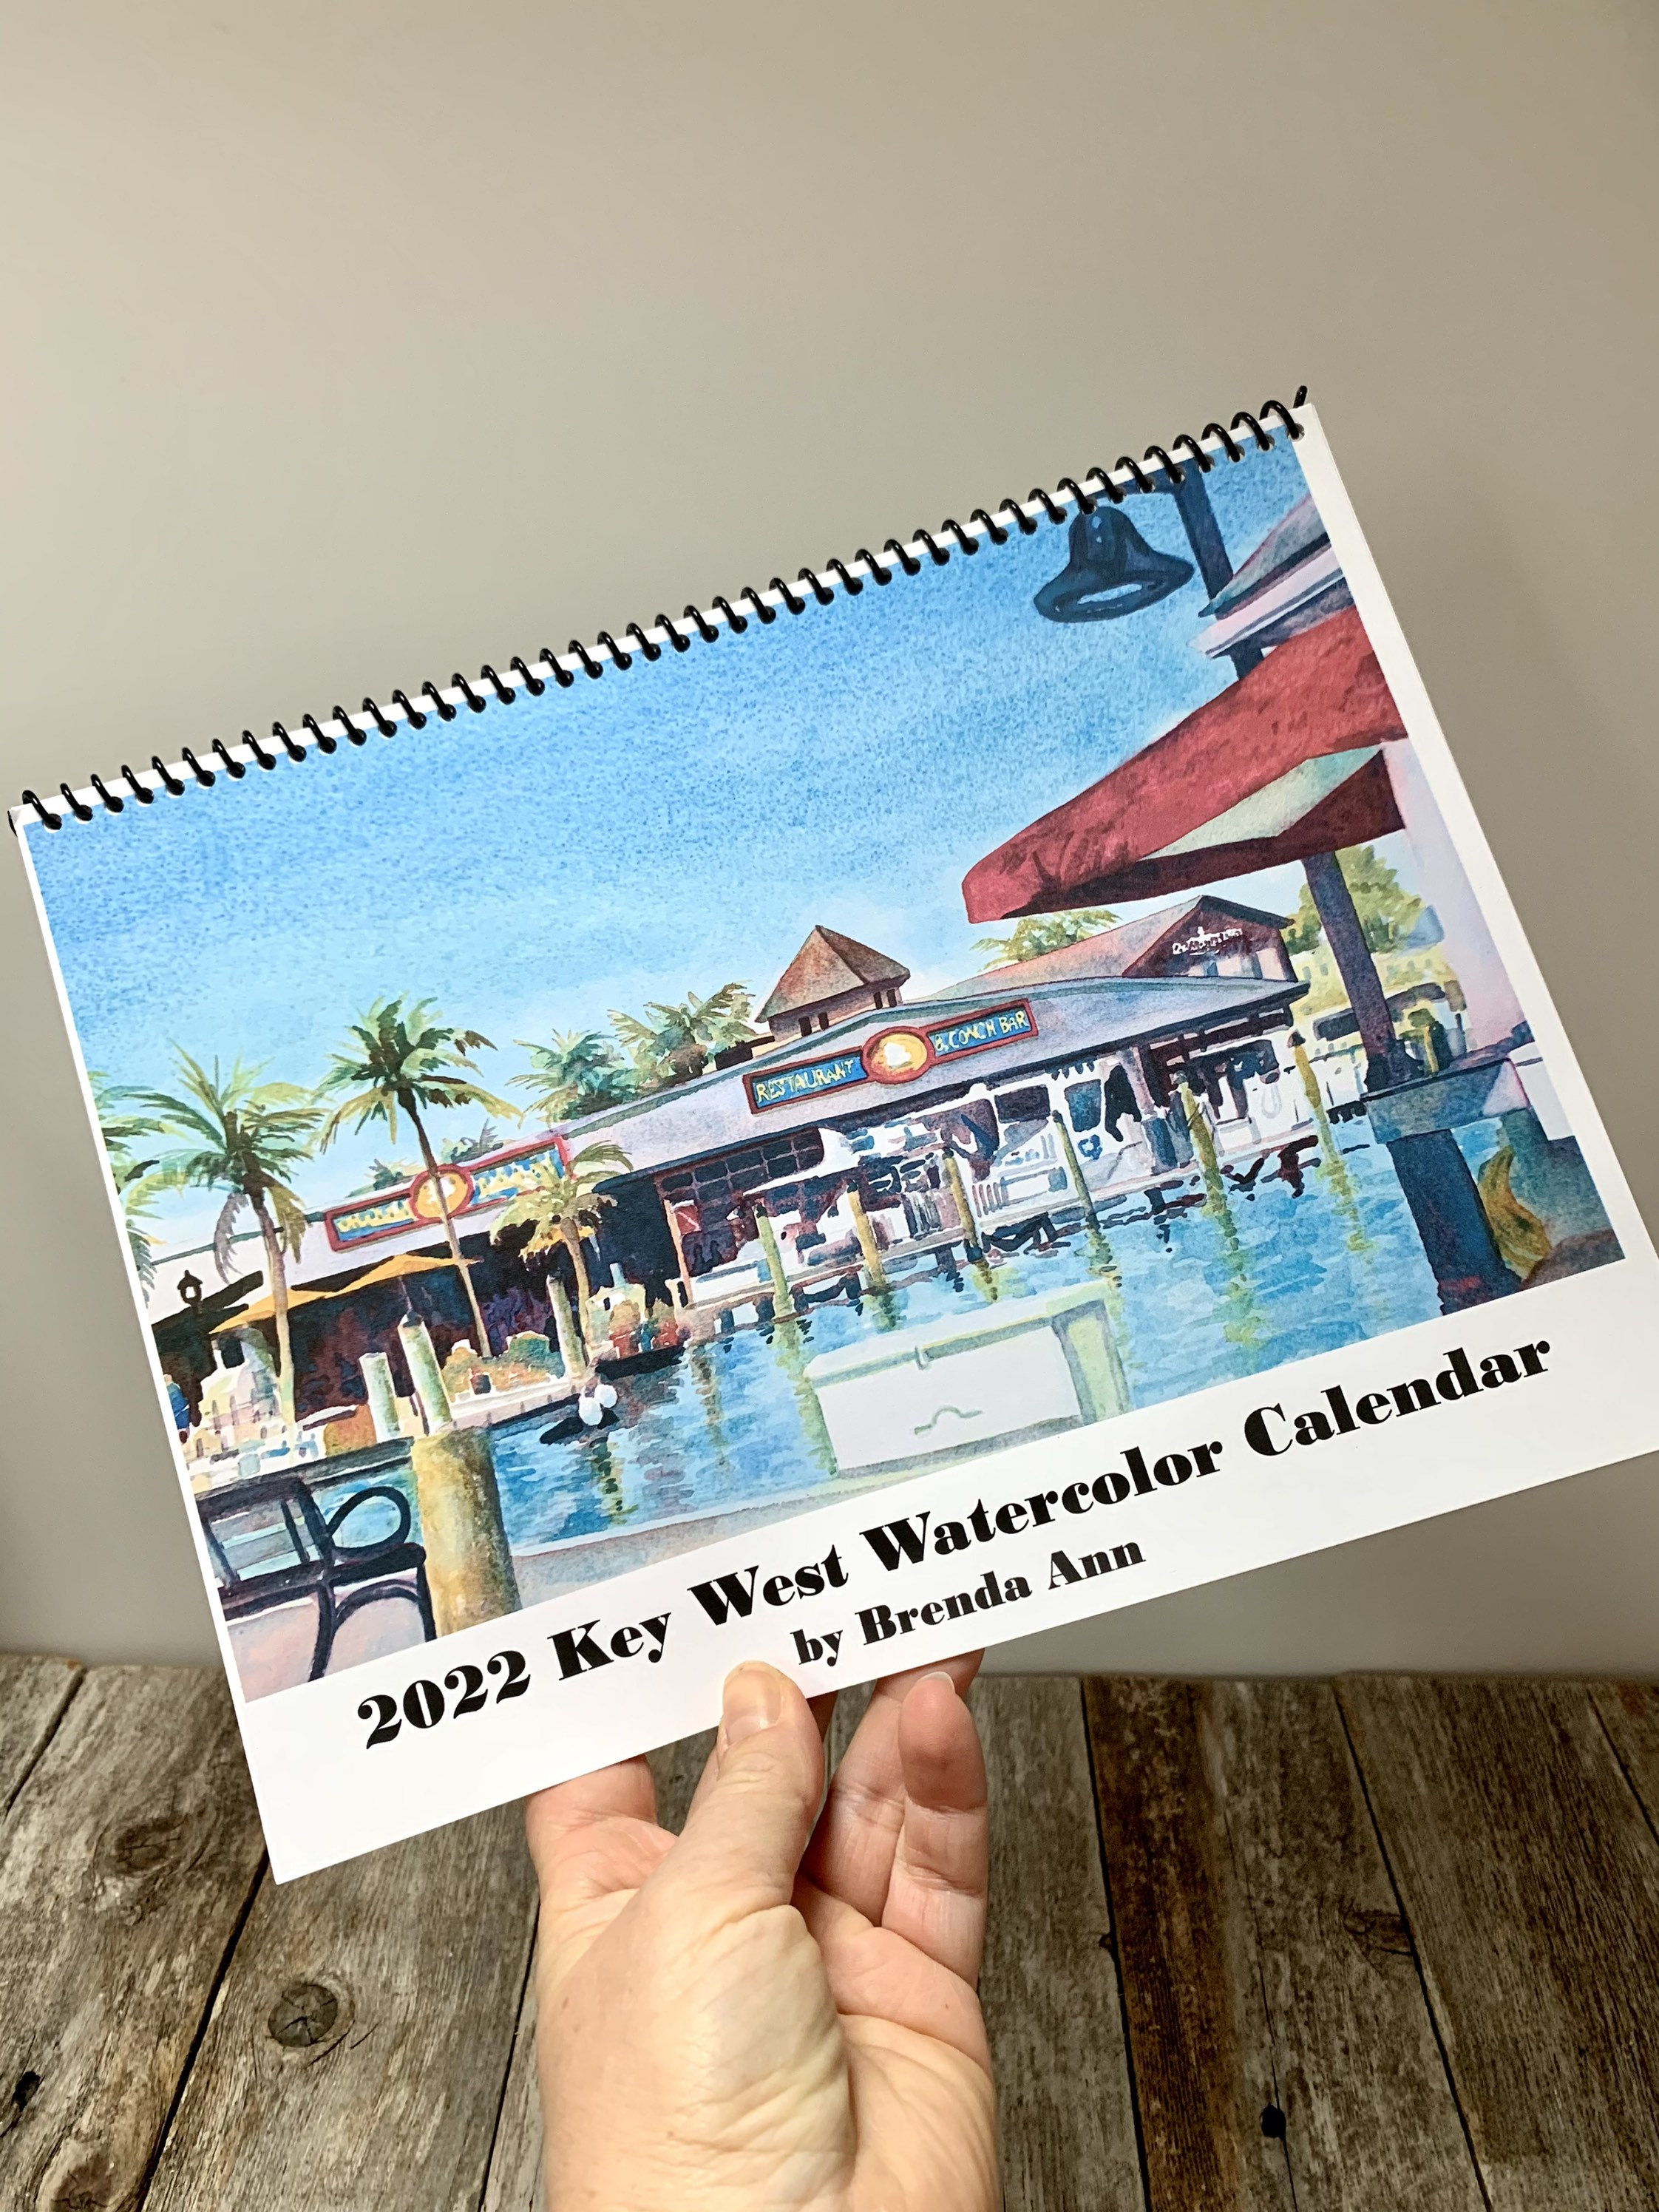 2022 Key West Watercolor Wall Calendar By Brenda Ann - Conch Republic Seafood Company Hemingway House Kermit's Florida Keys